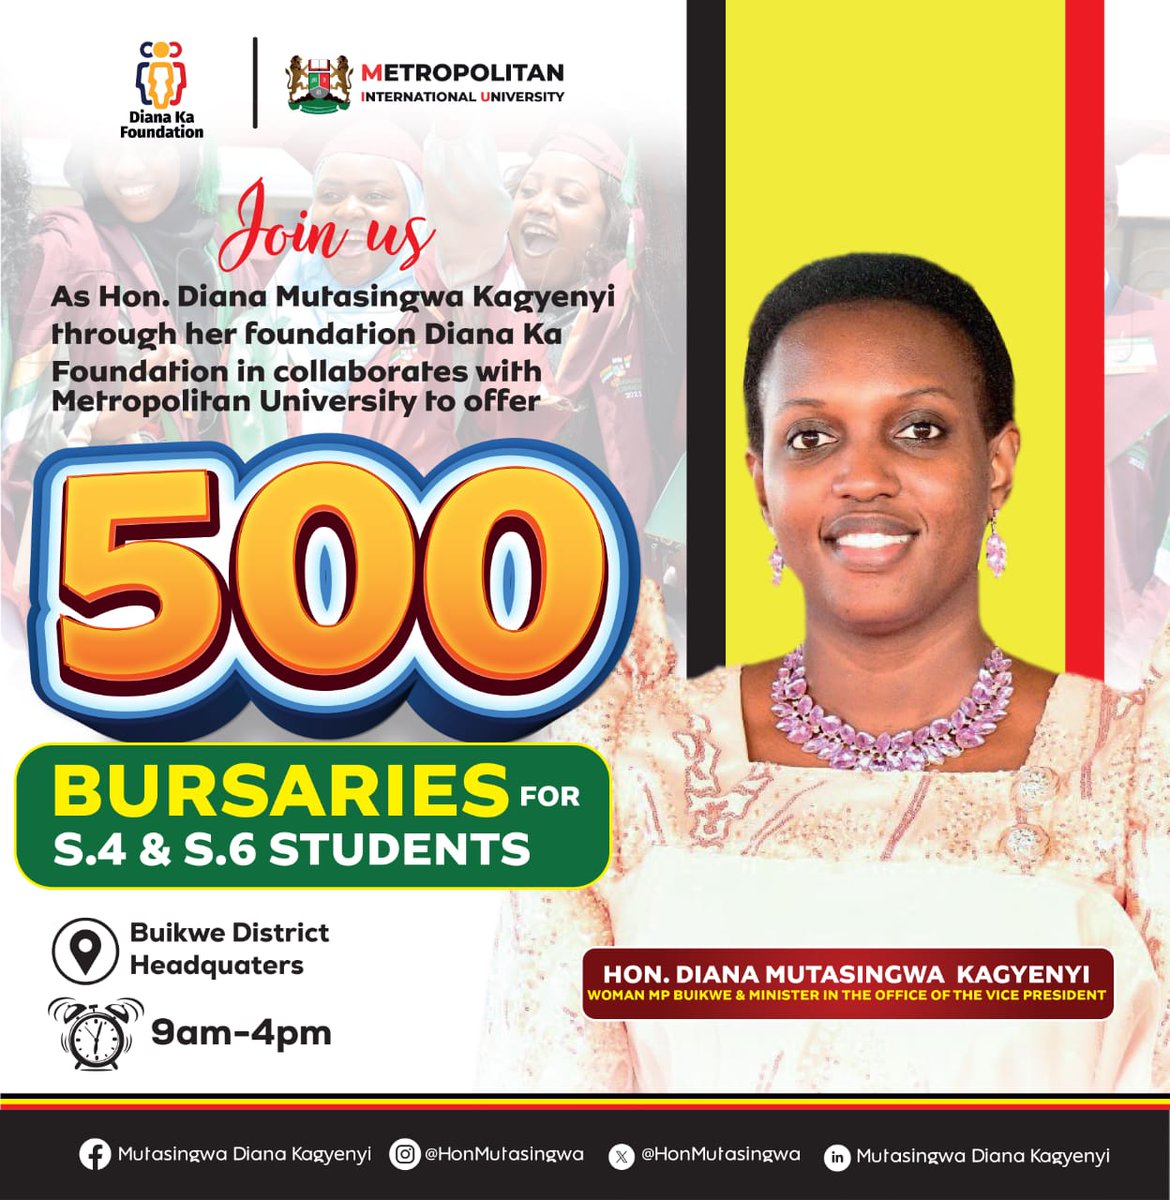 Don't let this bursary opportunity slip away. Secure your future today! 
#EducationMatters #OpportunityKnocks #BuikweBursaries